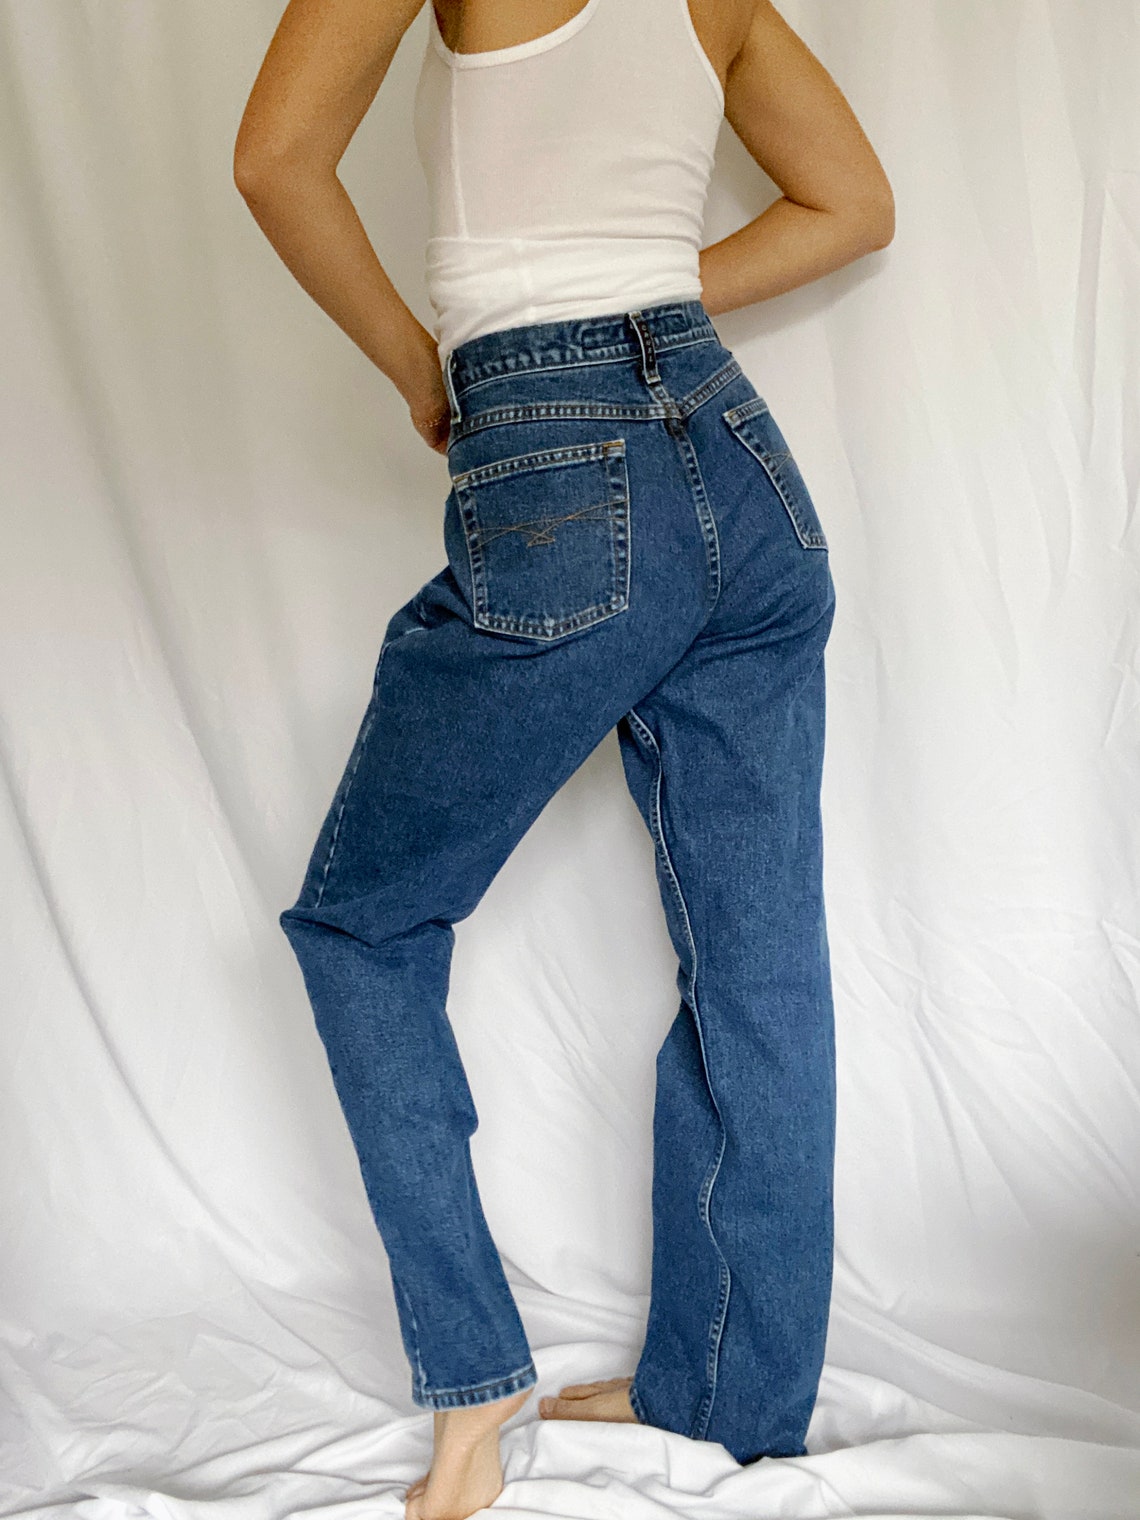 Vintage Cruel Girl jeans 32 waist | Etsy